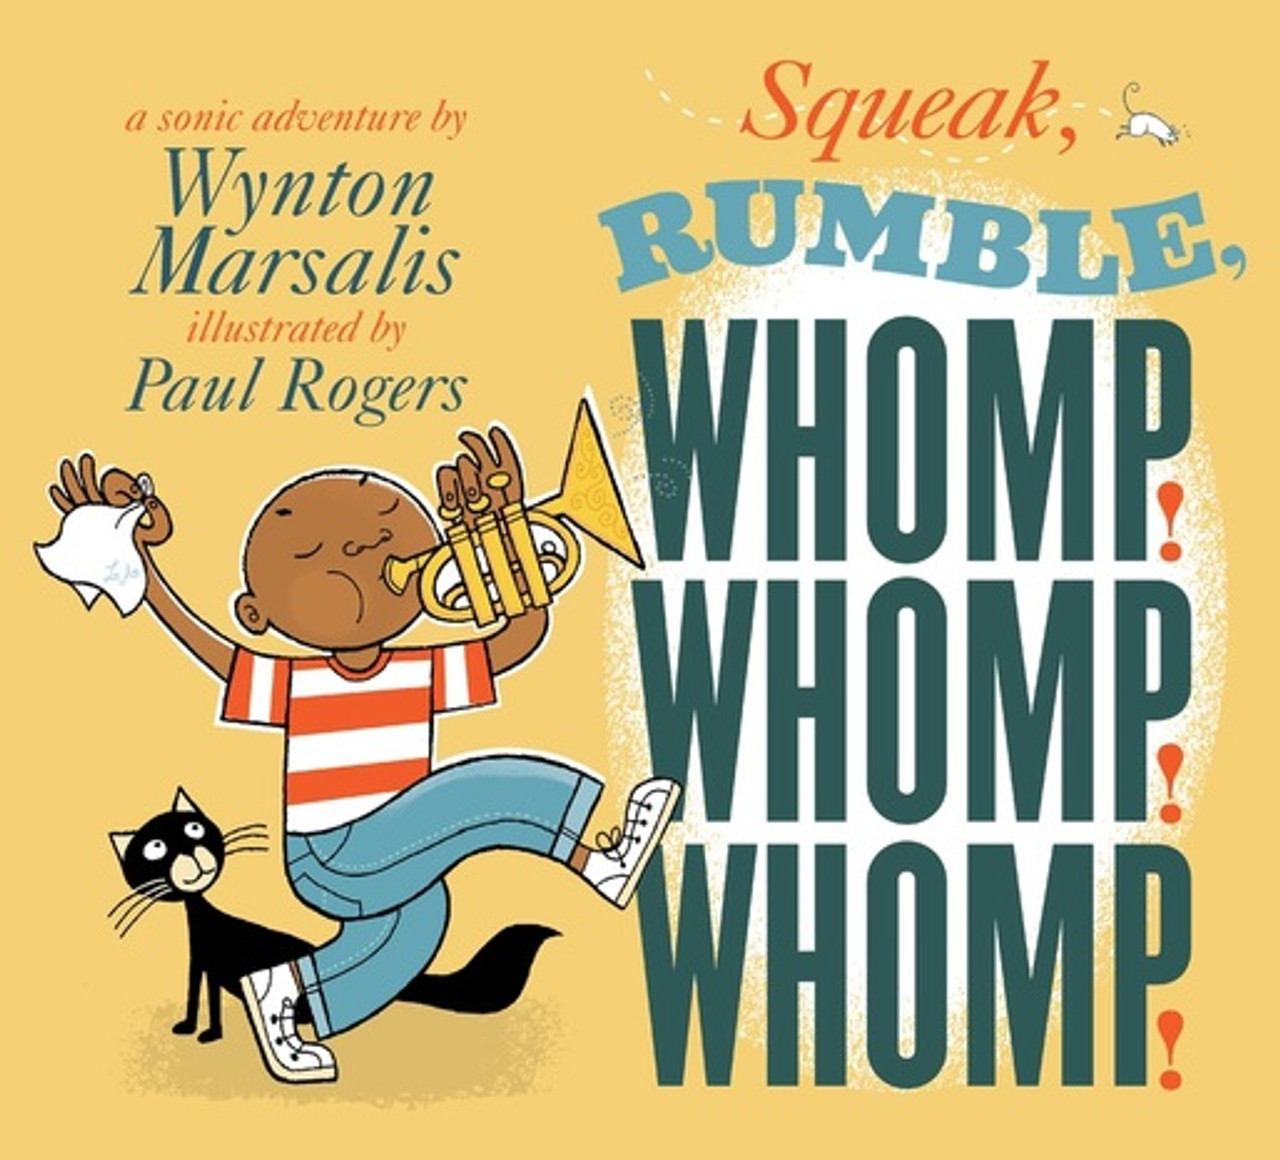 Image of "Squeak Rumble Whomp"